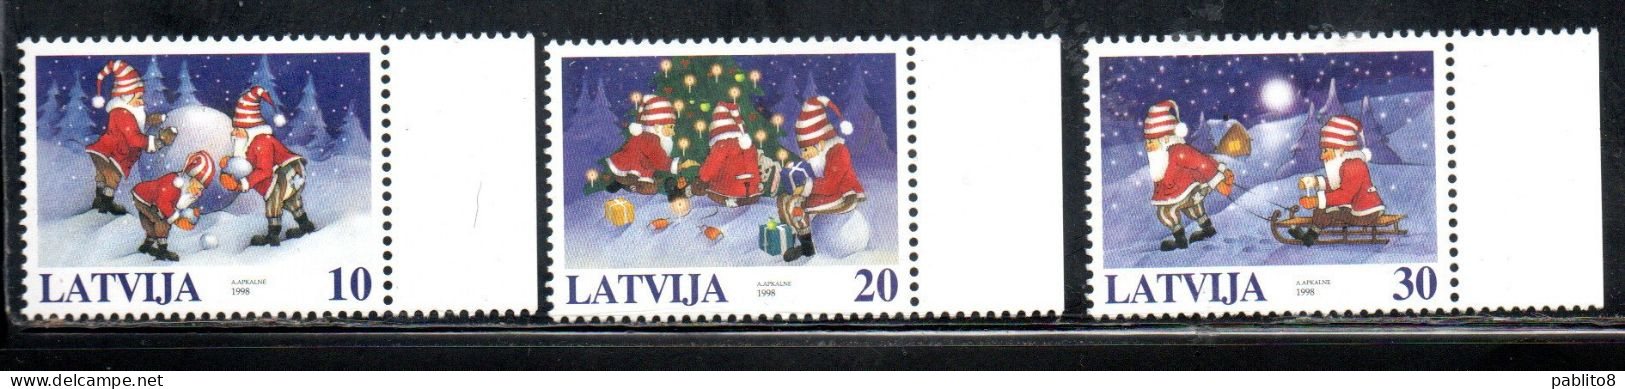 LATVIA LETTLAND LETTONIA LATVIJA 1998 CHRISTMAS NATALE NOEL WEIHNACHTEN NAVIDAD COMPLETE SET SERIE COMPLETA MNH - Letonia